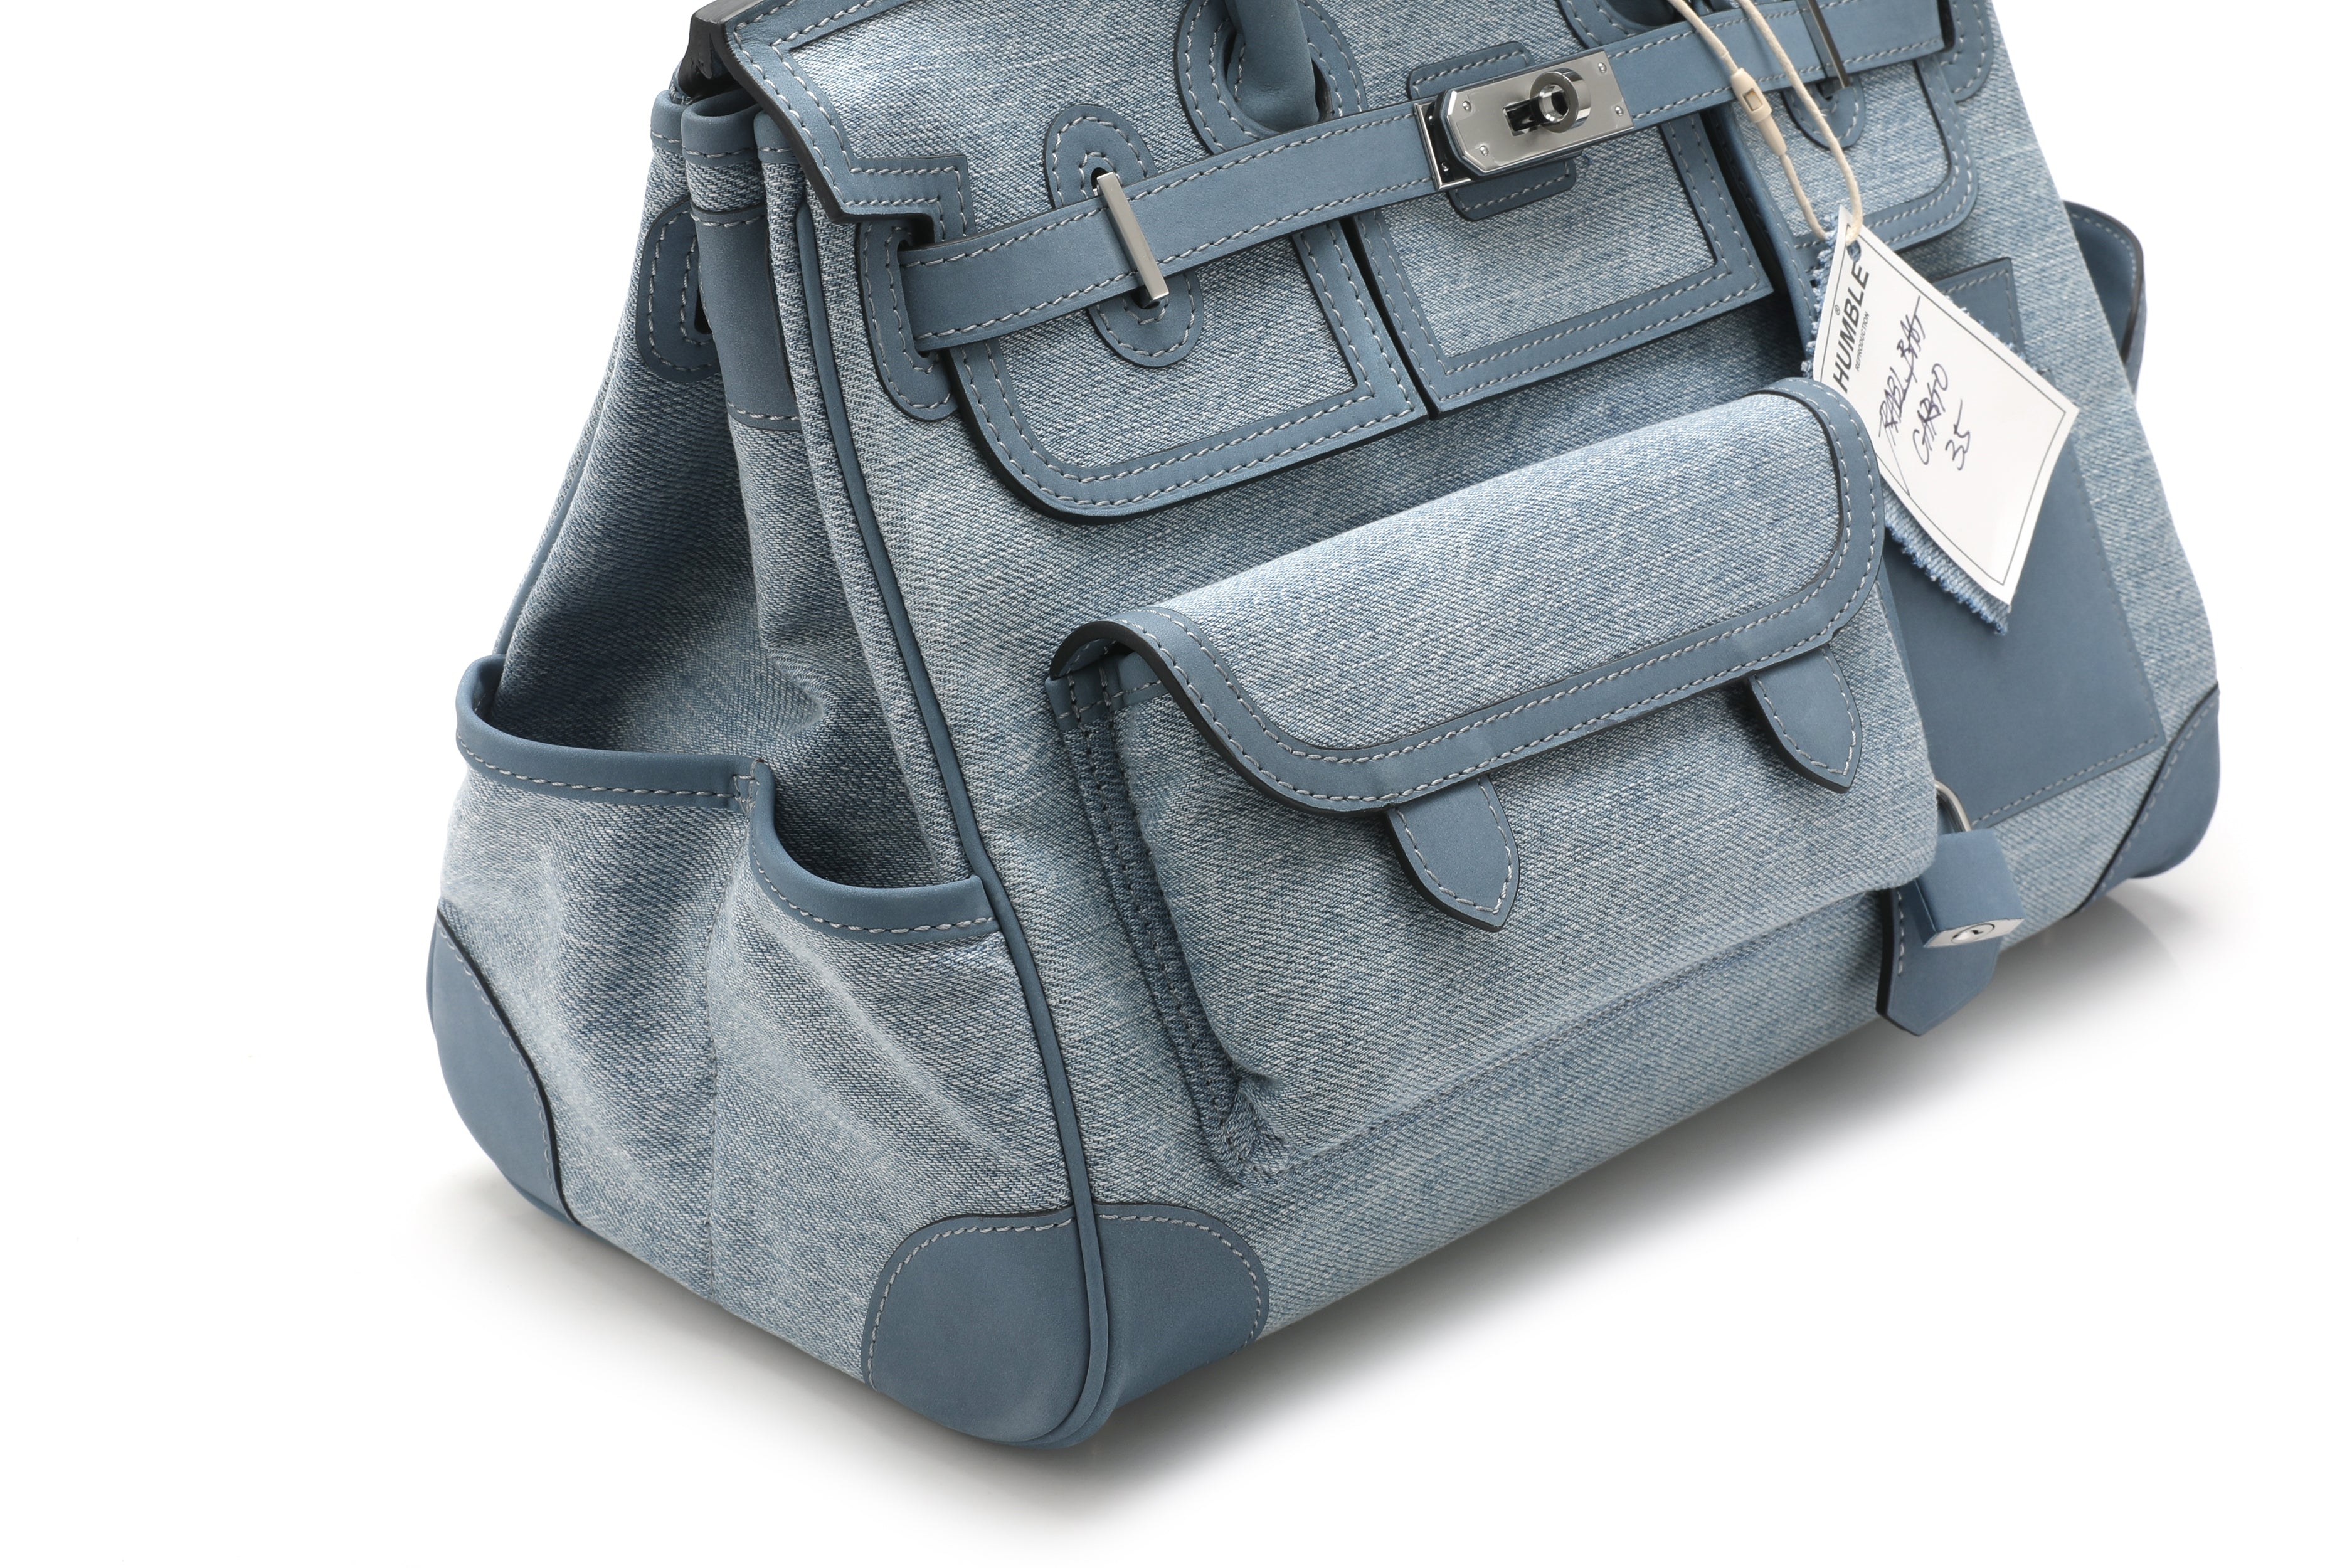 Travel Bag Cargo 35 Khaki/Black (Pre-Order) – HUMBLE REPRODUCTION